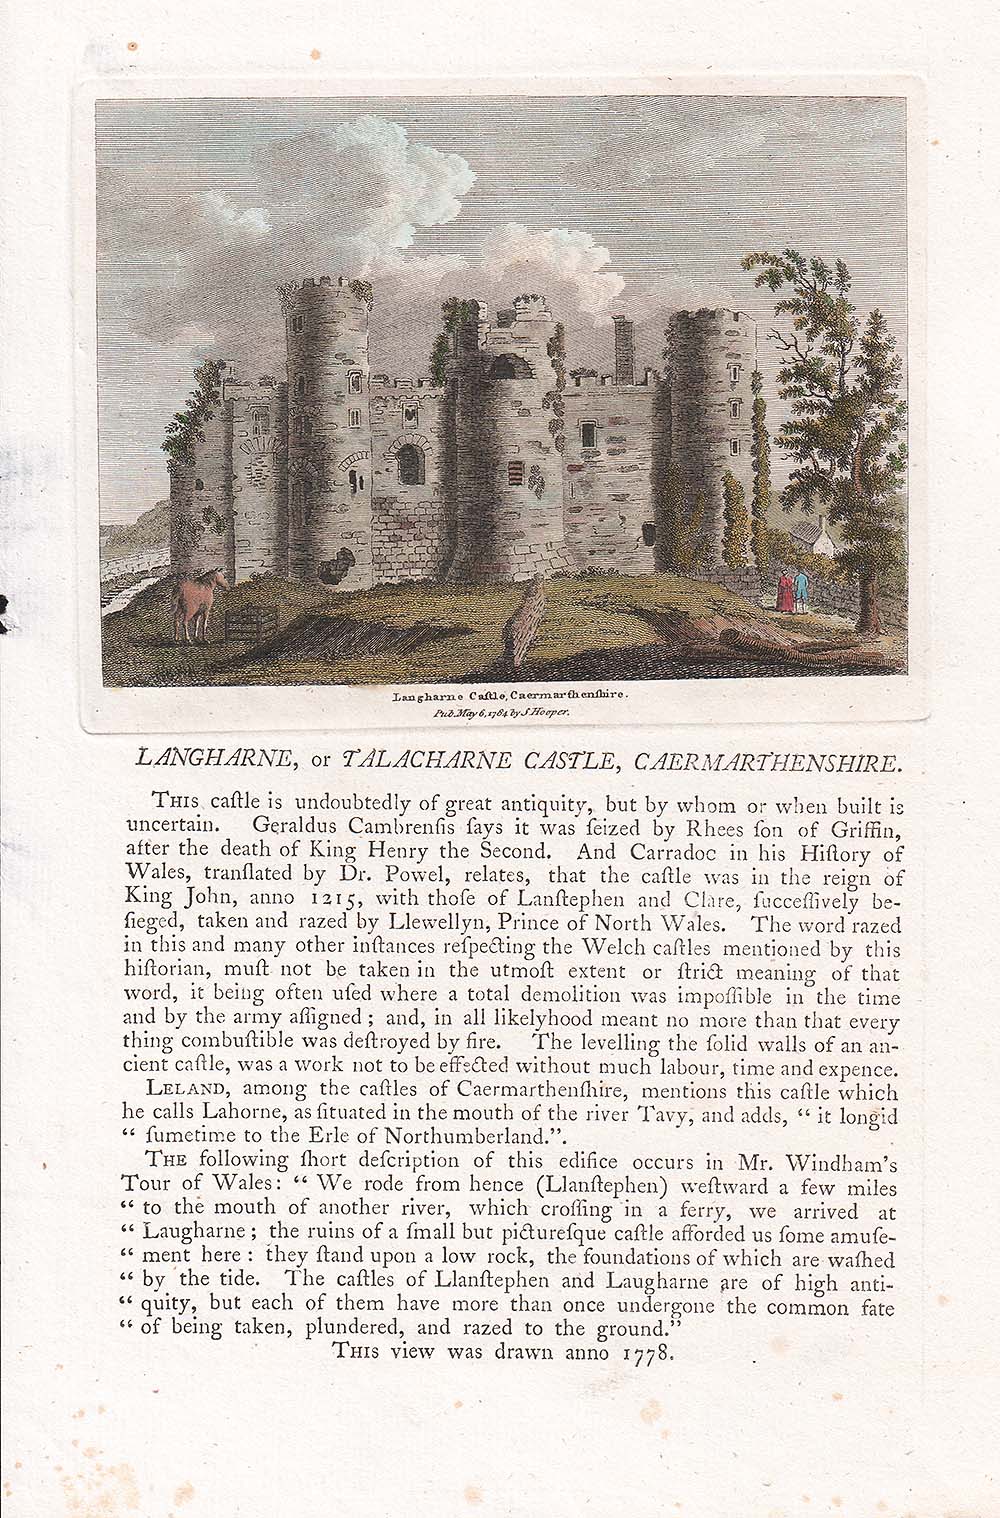 Langharne or Talacharne Castle Caermarthenshire